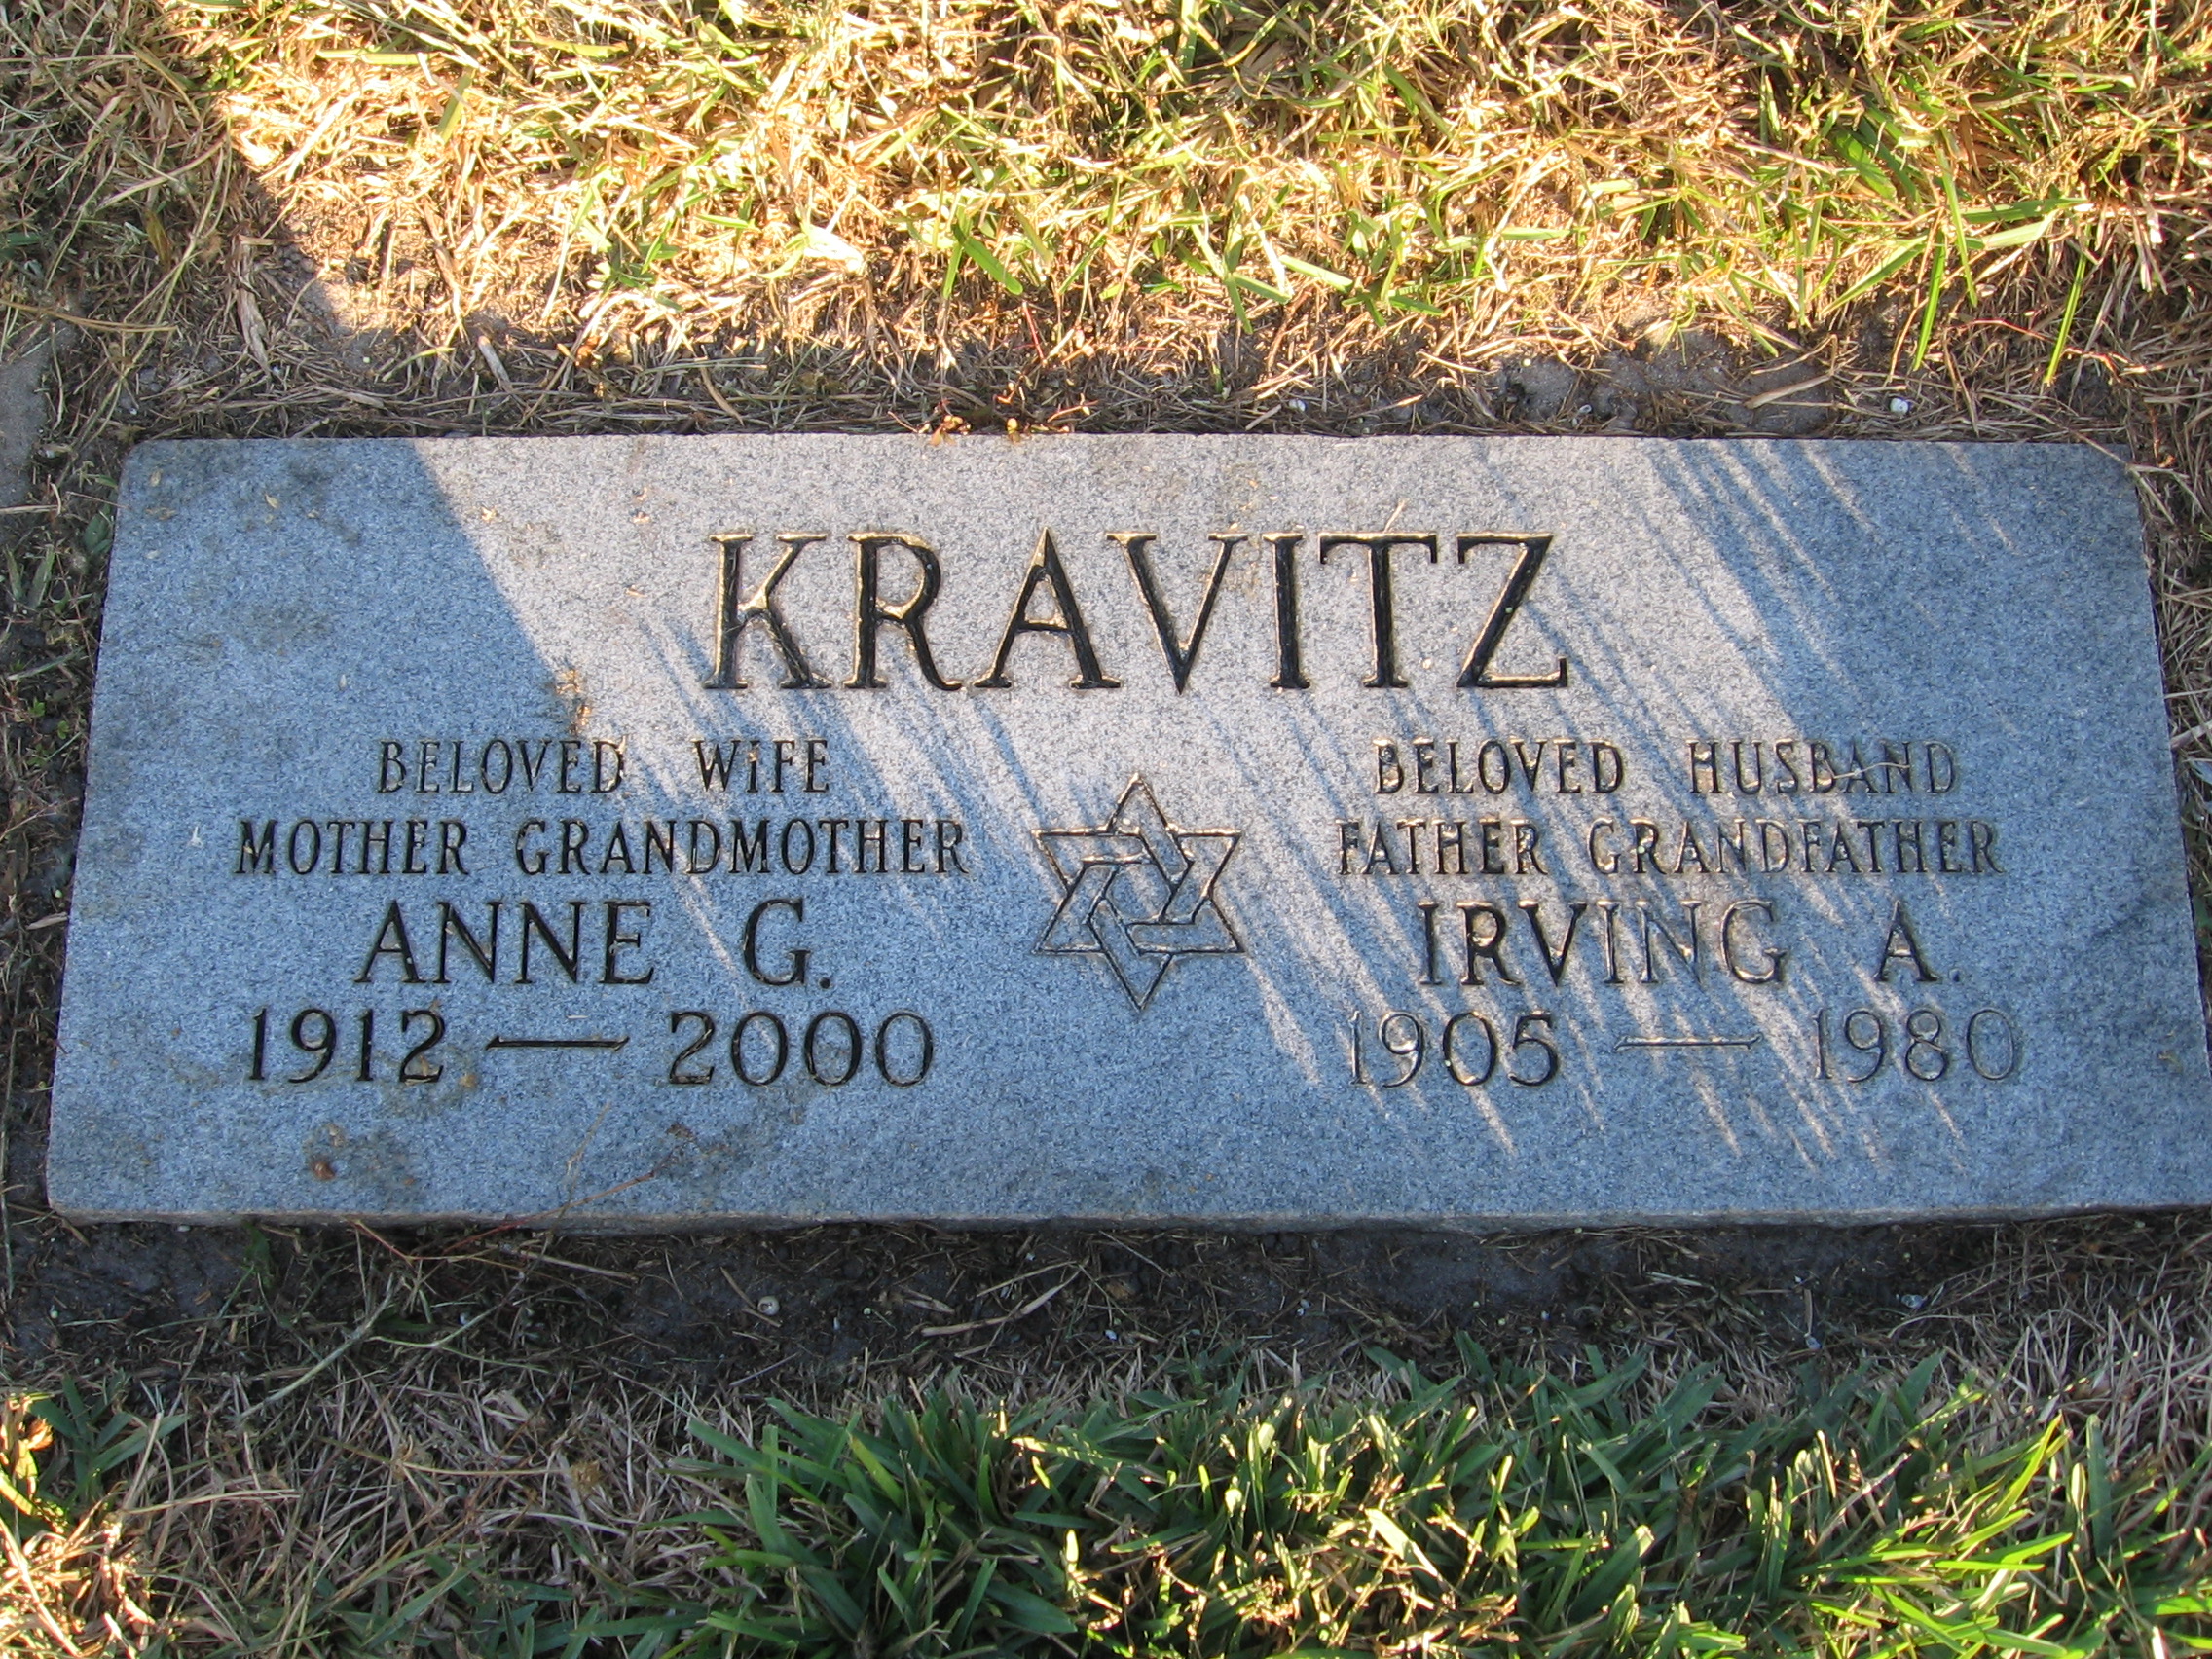 Irving A Kravitz